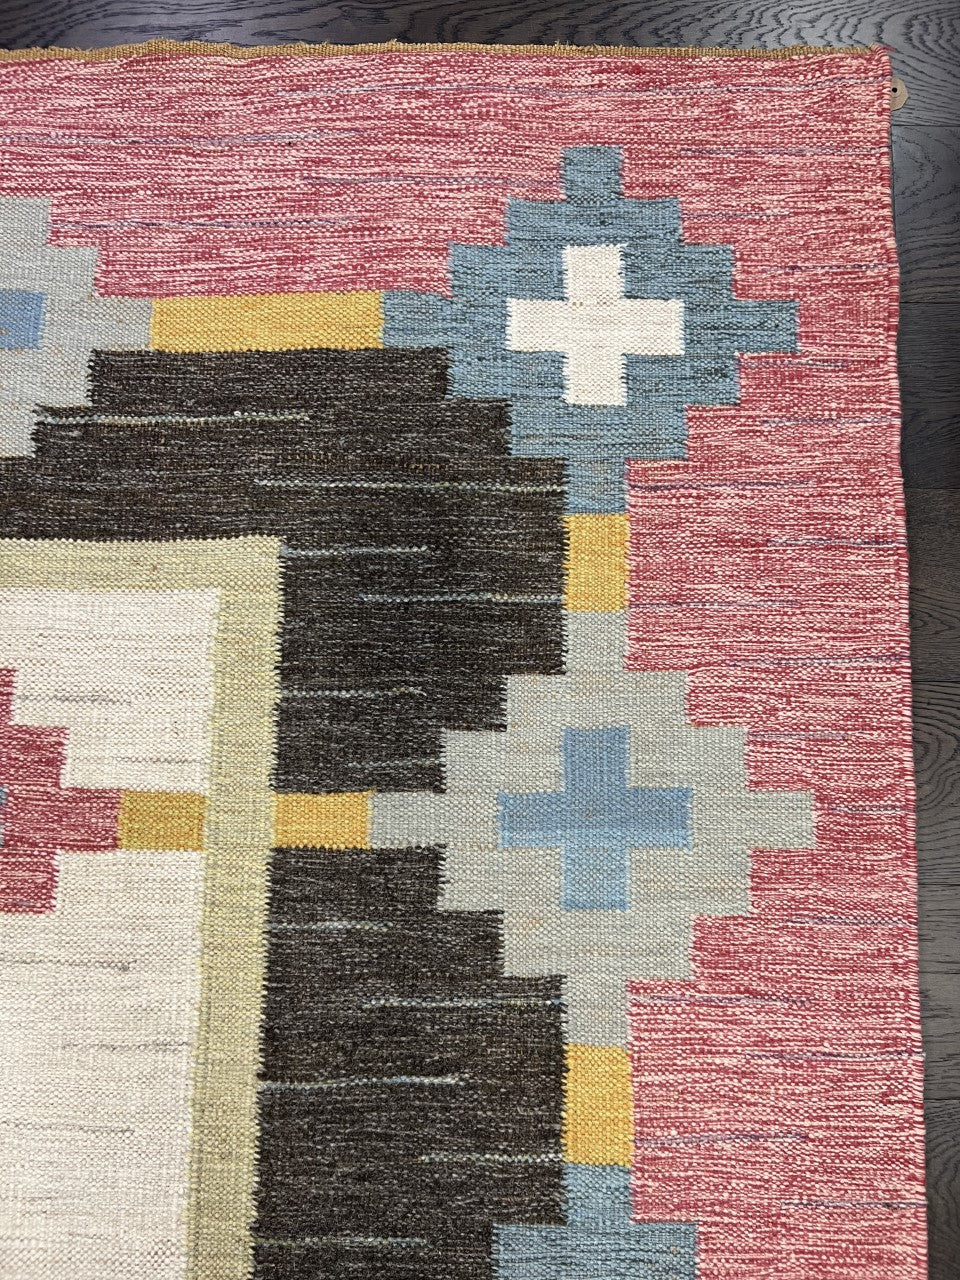 Beautiful Antique Swedish Kilim decorative rug